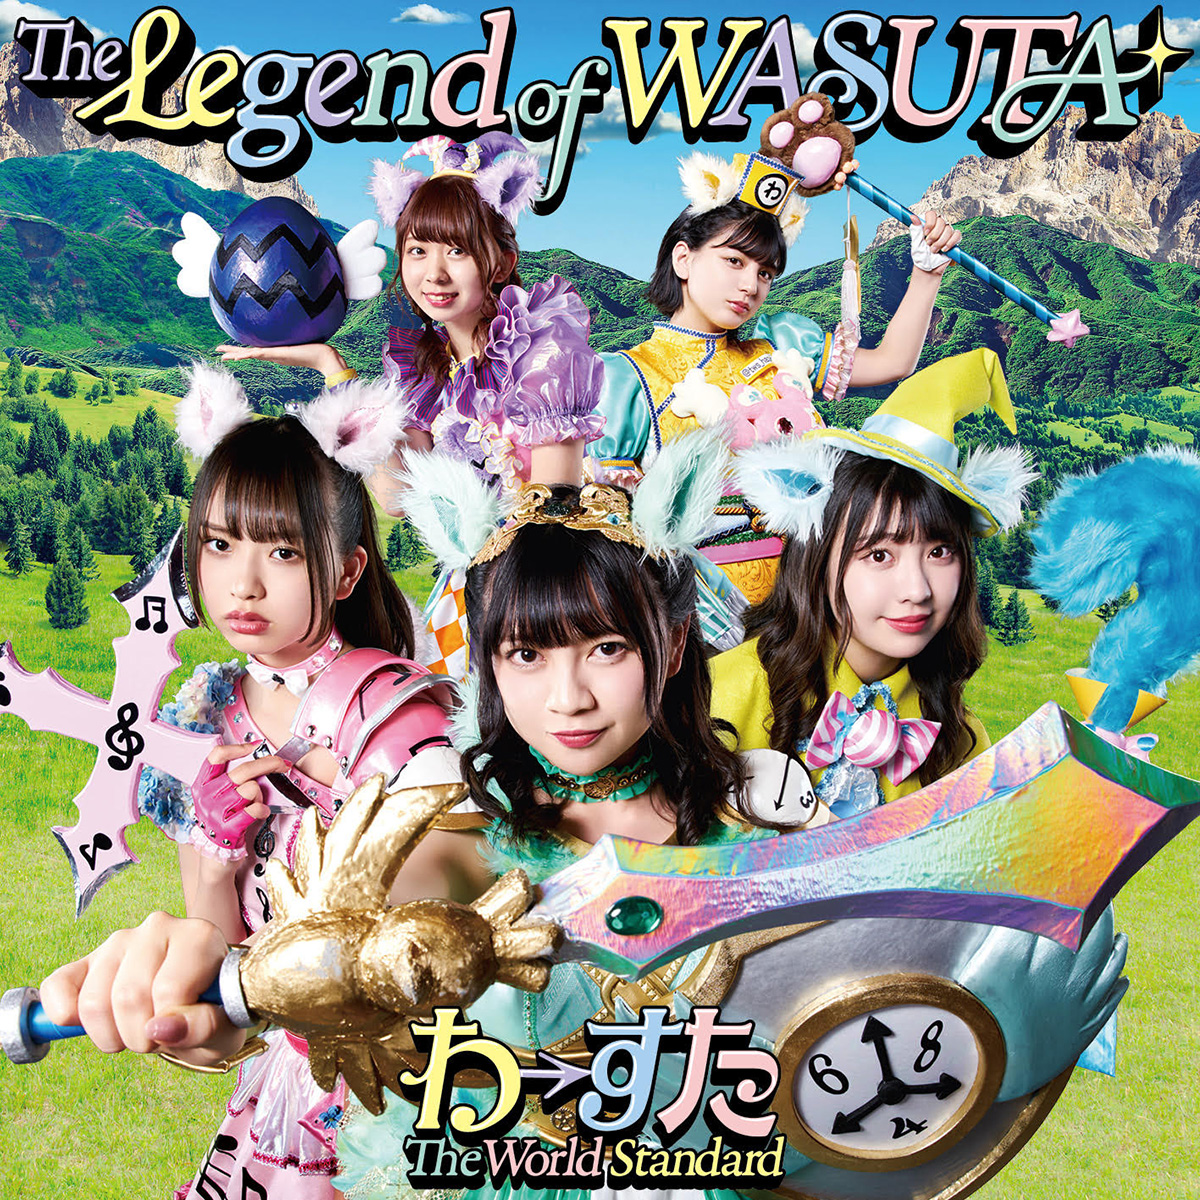 Wasuta Legend of Wasuta